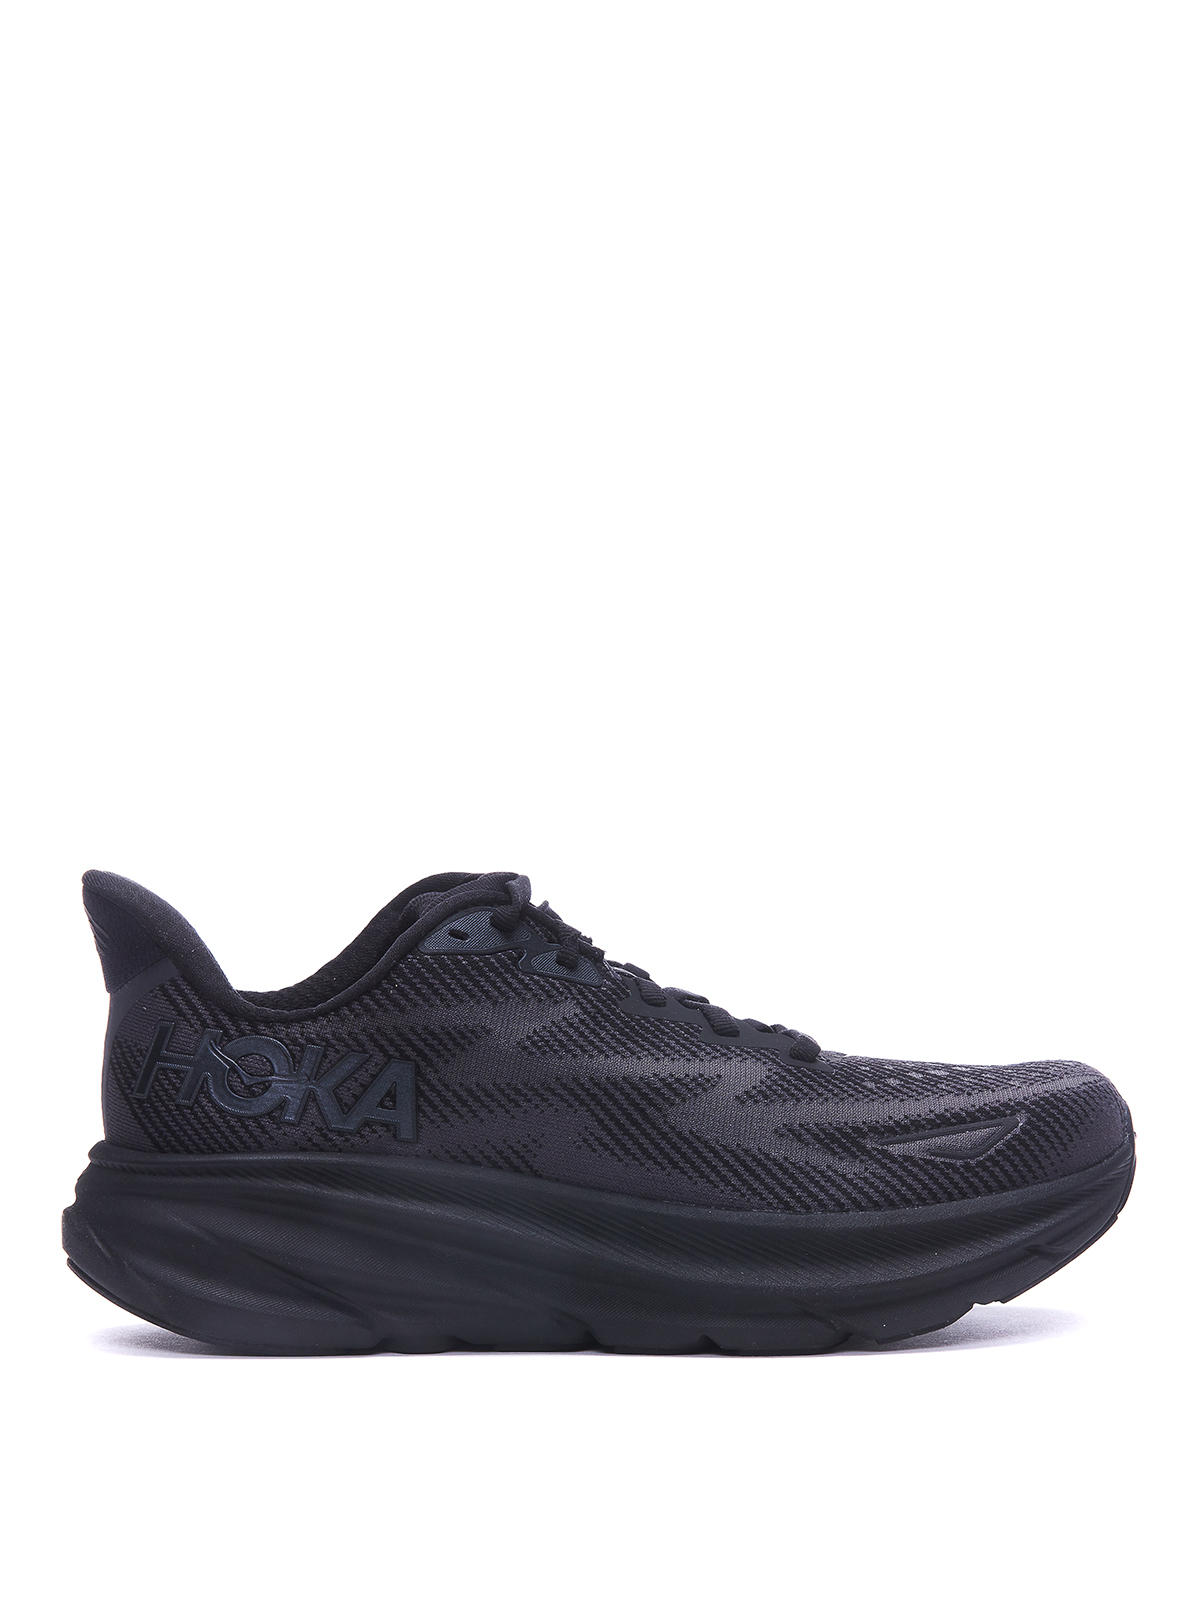 Hoka Clifton Sneakers In Black